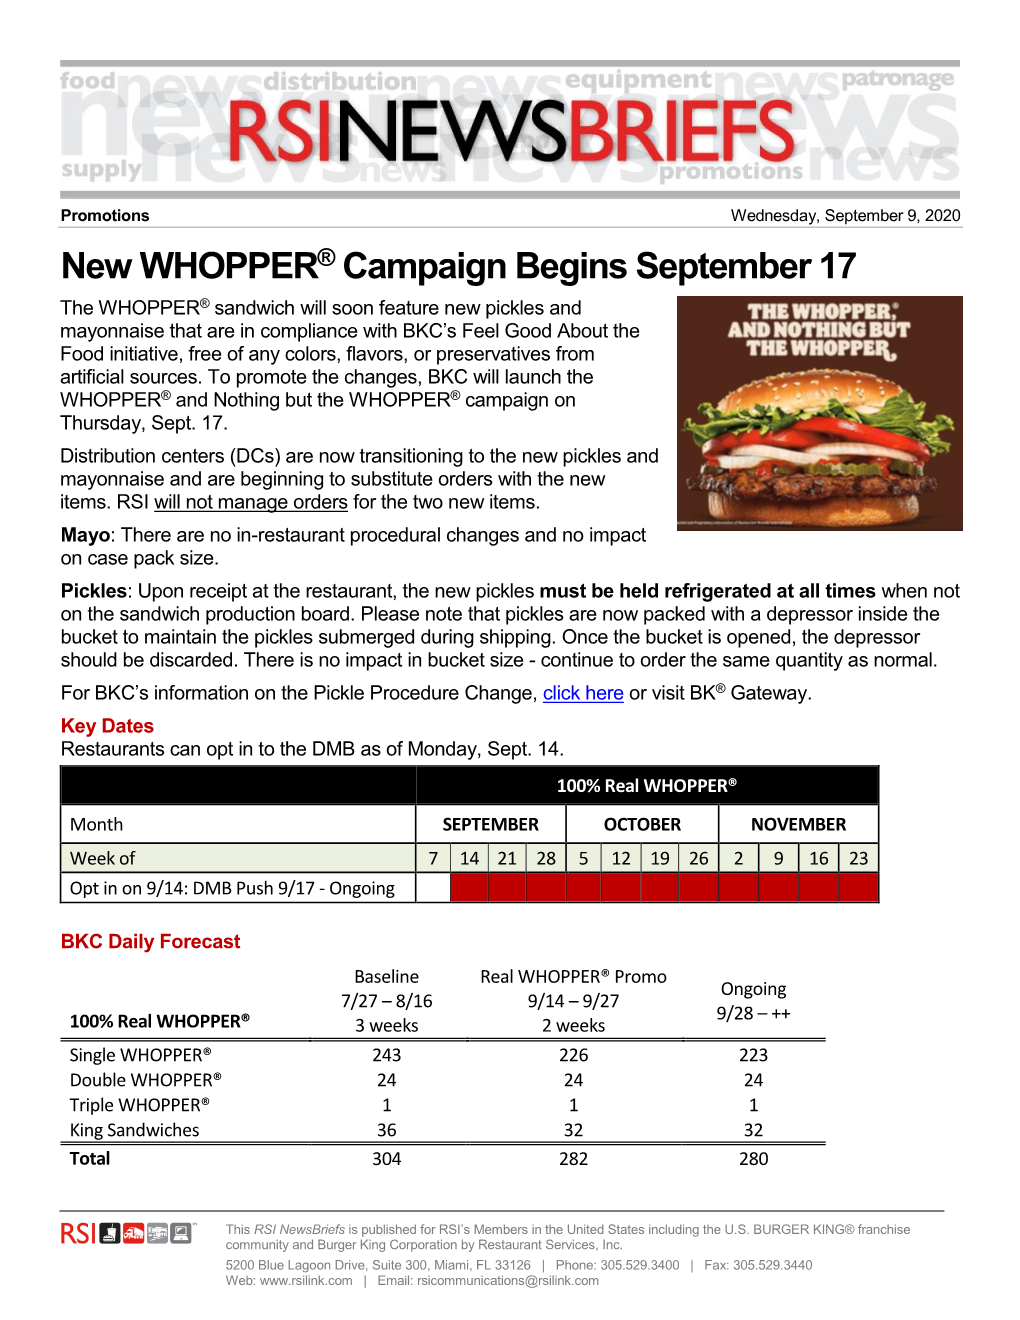 New WHOPPER® Campaign Begins September 17